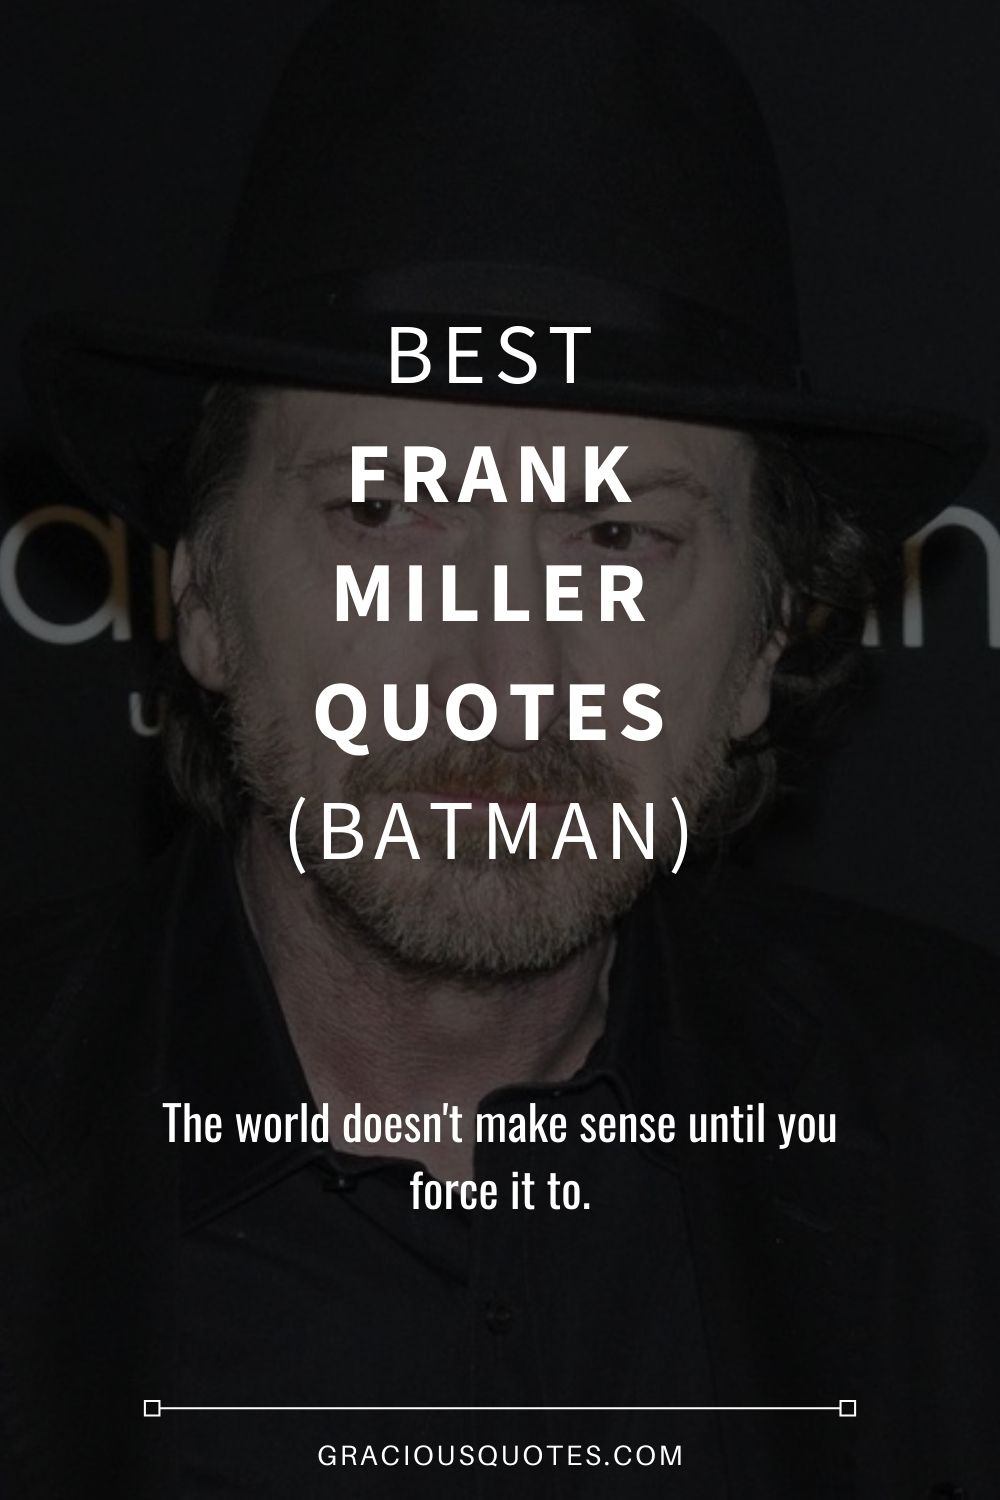 Best Frank Miller Quotes (BATMAN) - Gracious Quotes